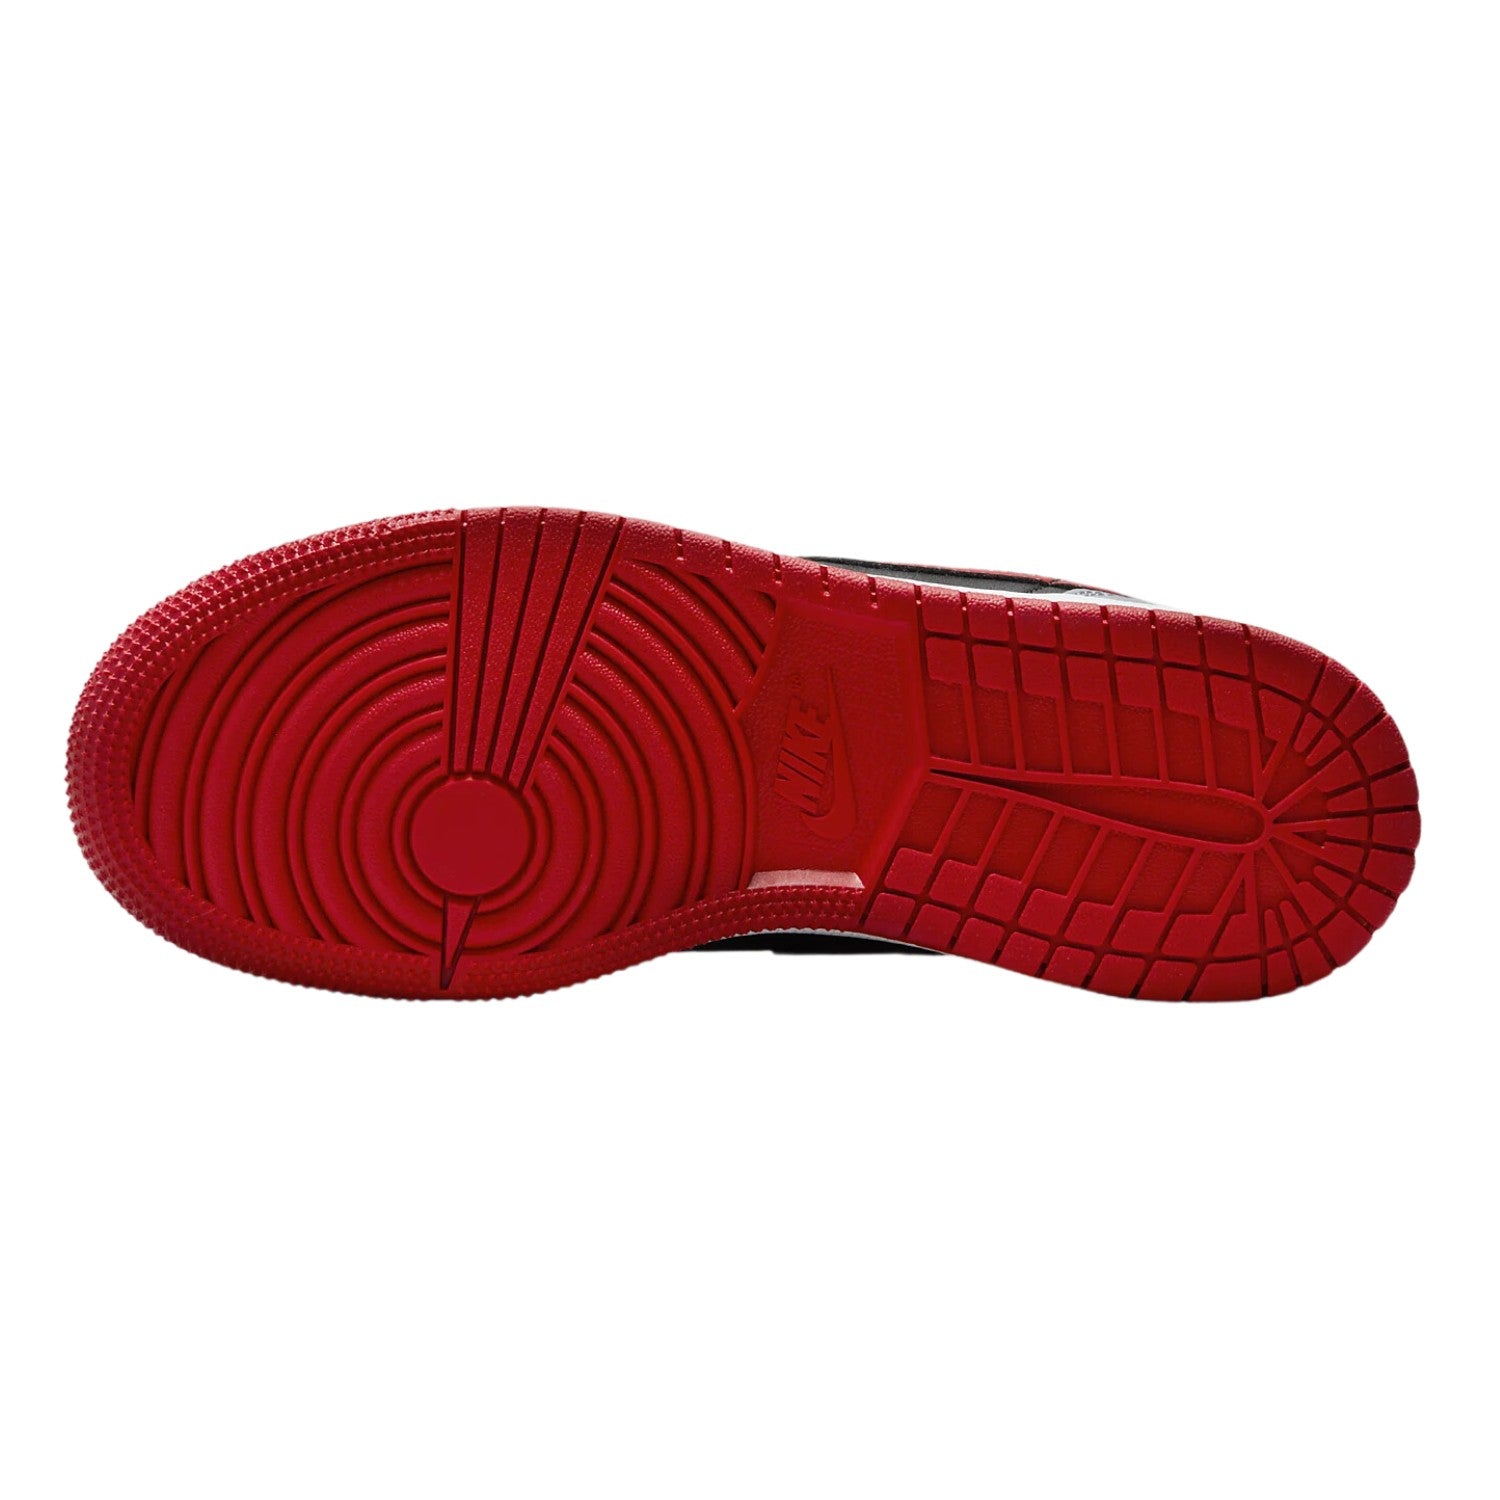 Air Jordan 1 LoW "Reverse Bred" (Gs) Big Kids Style : 553560